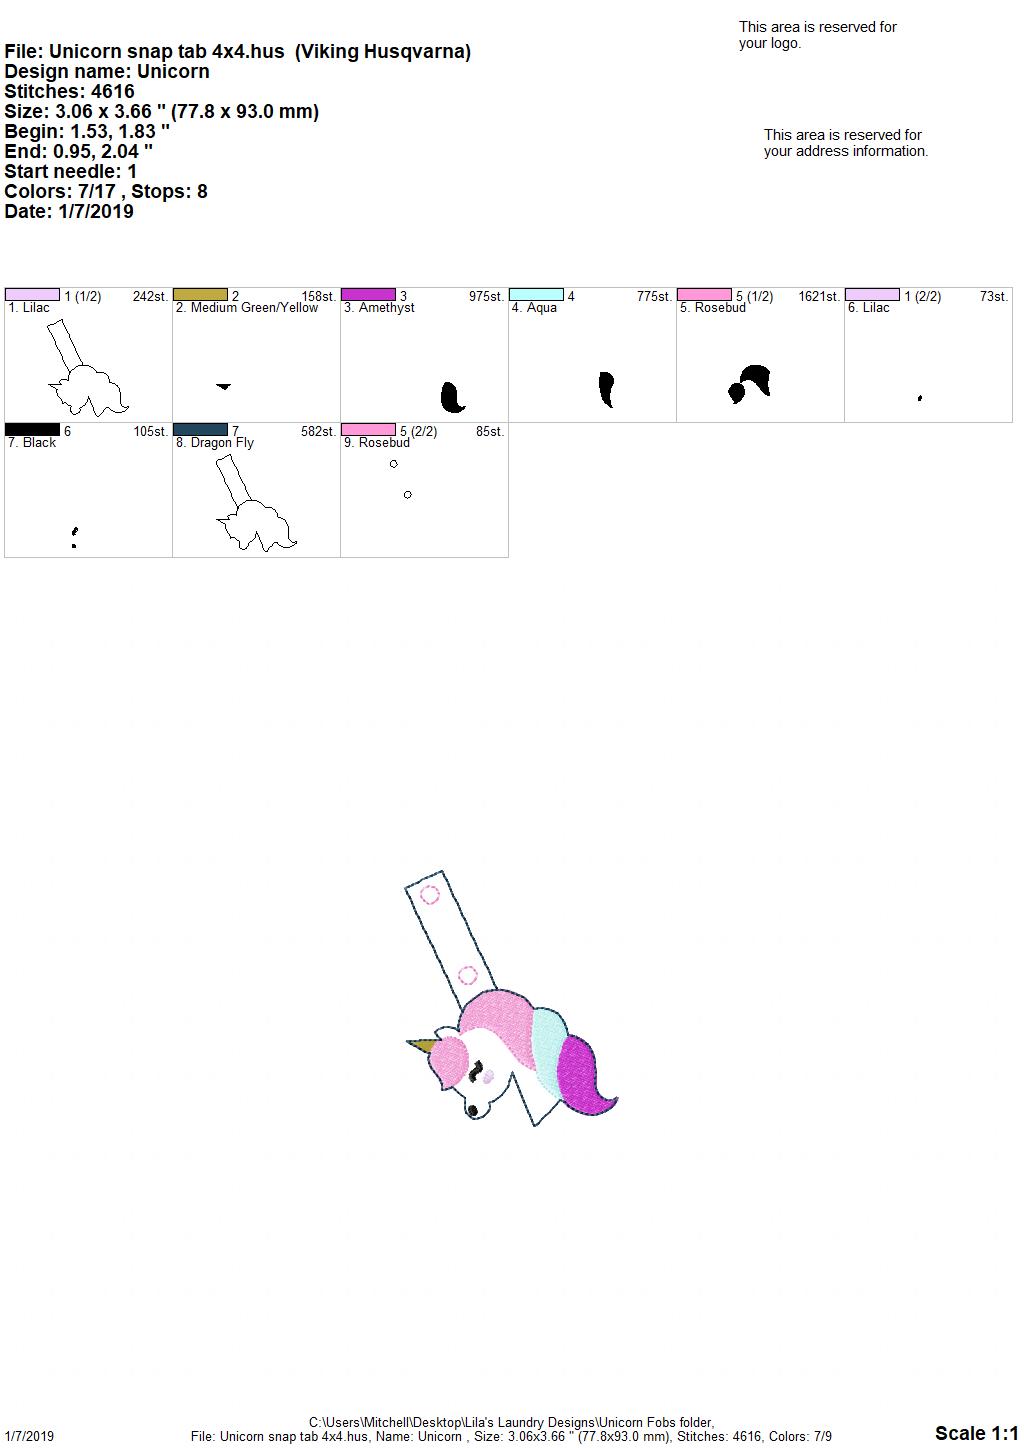 Unicorn Fobs - Embroidery Design - DIGITAL Embroidery DESIGN